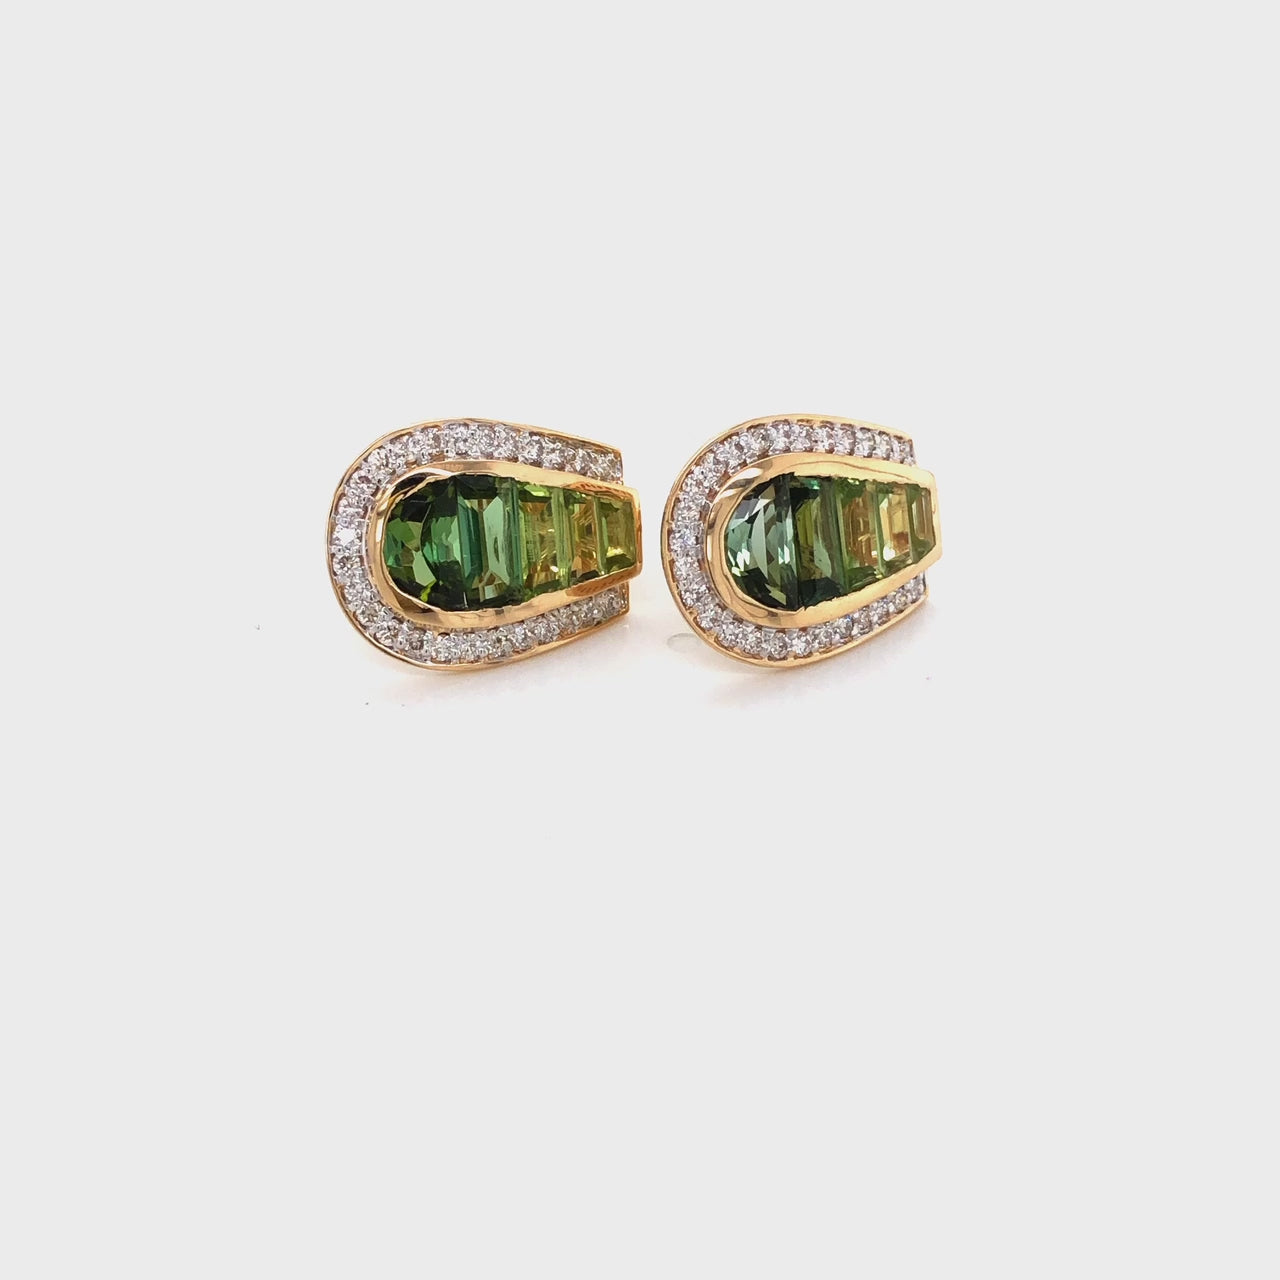 Green peridot earrings